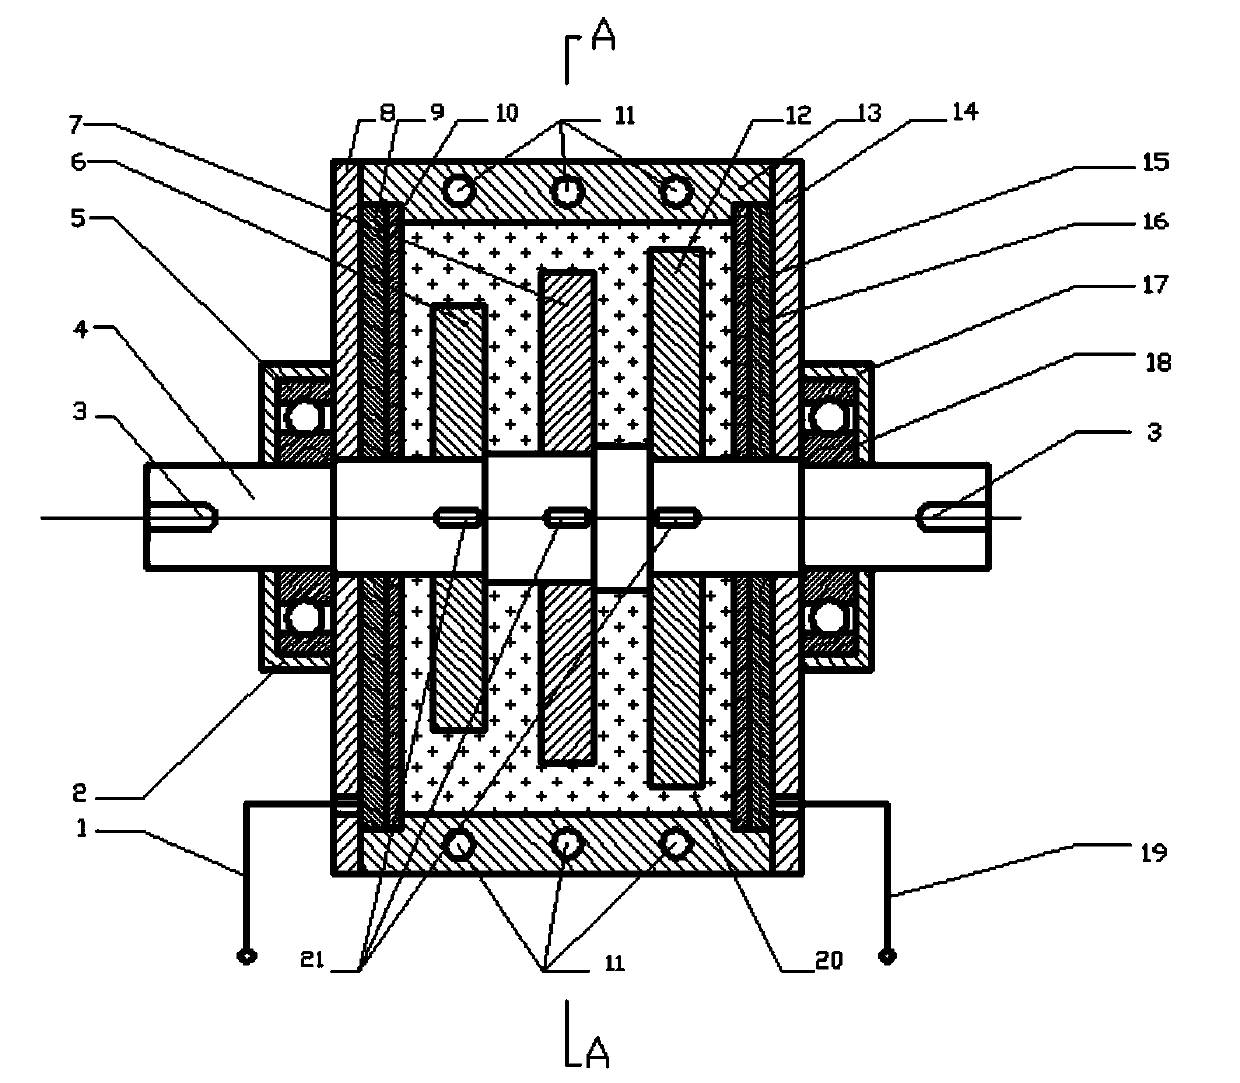 Seven-stage adjustable rotary type electrorheological fluid brake